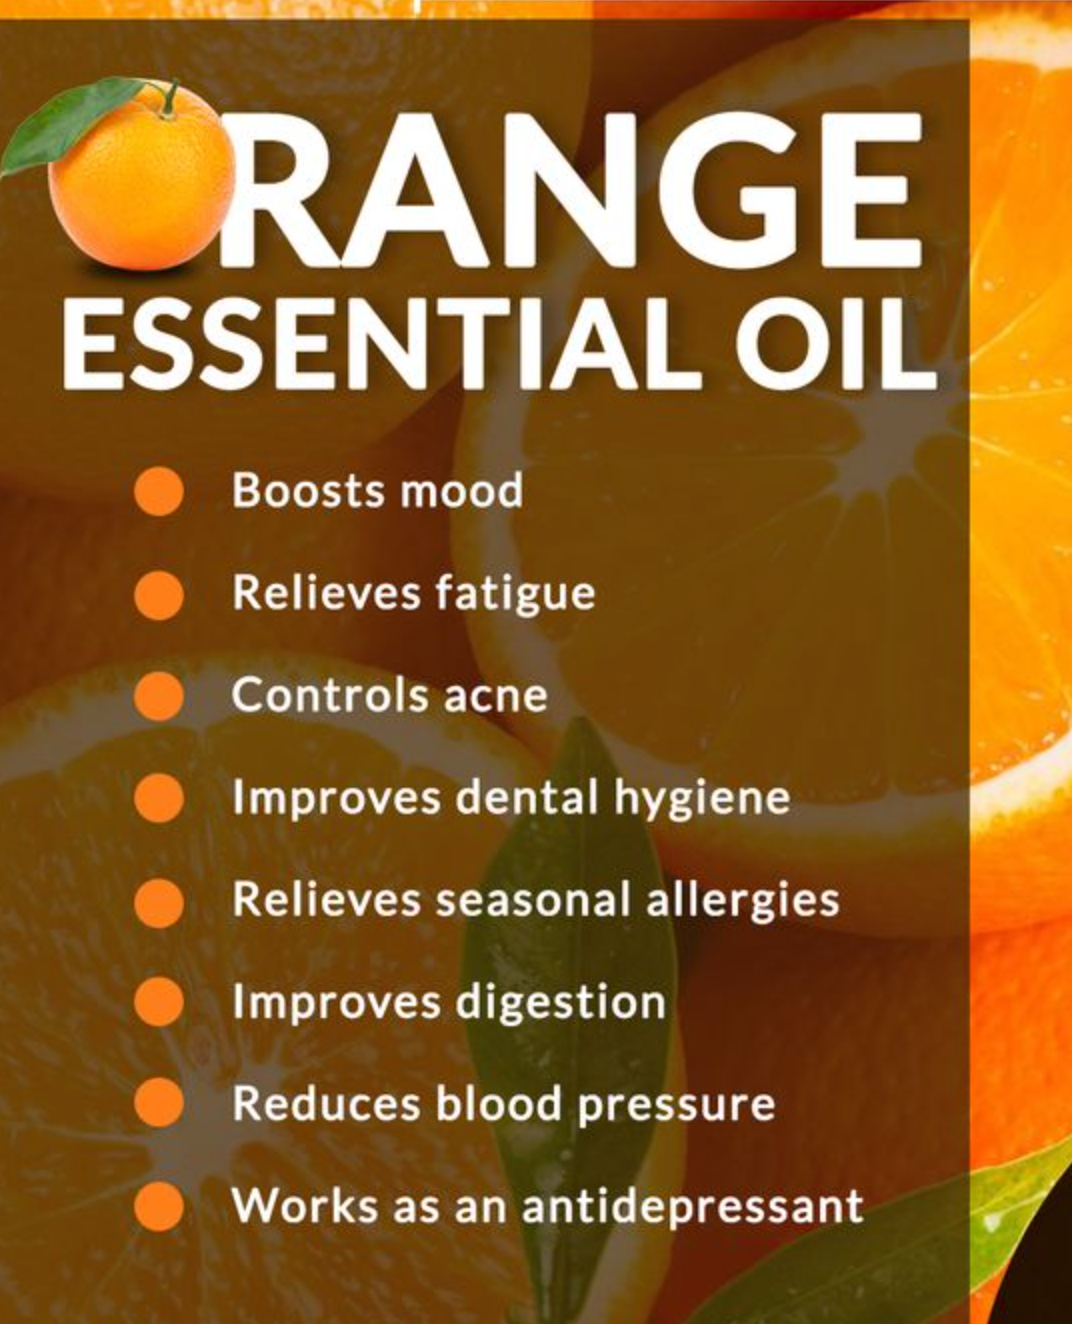 Introduction to Citrus Essential Oils: Lemon, Sweet Orange